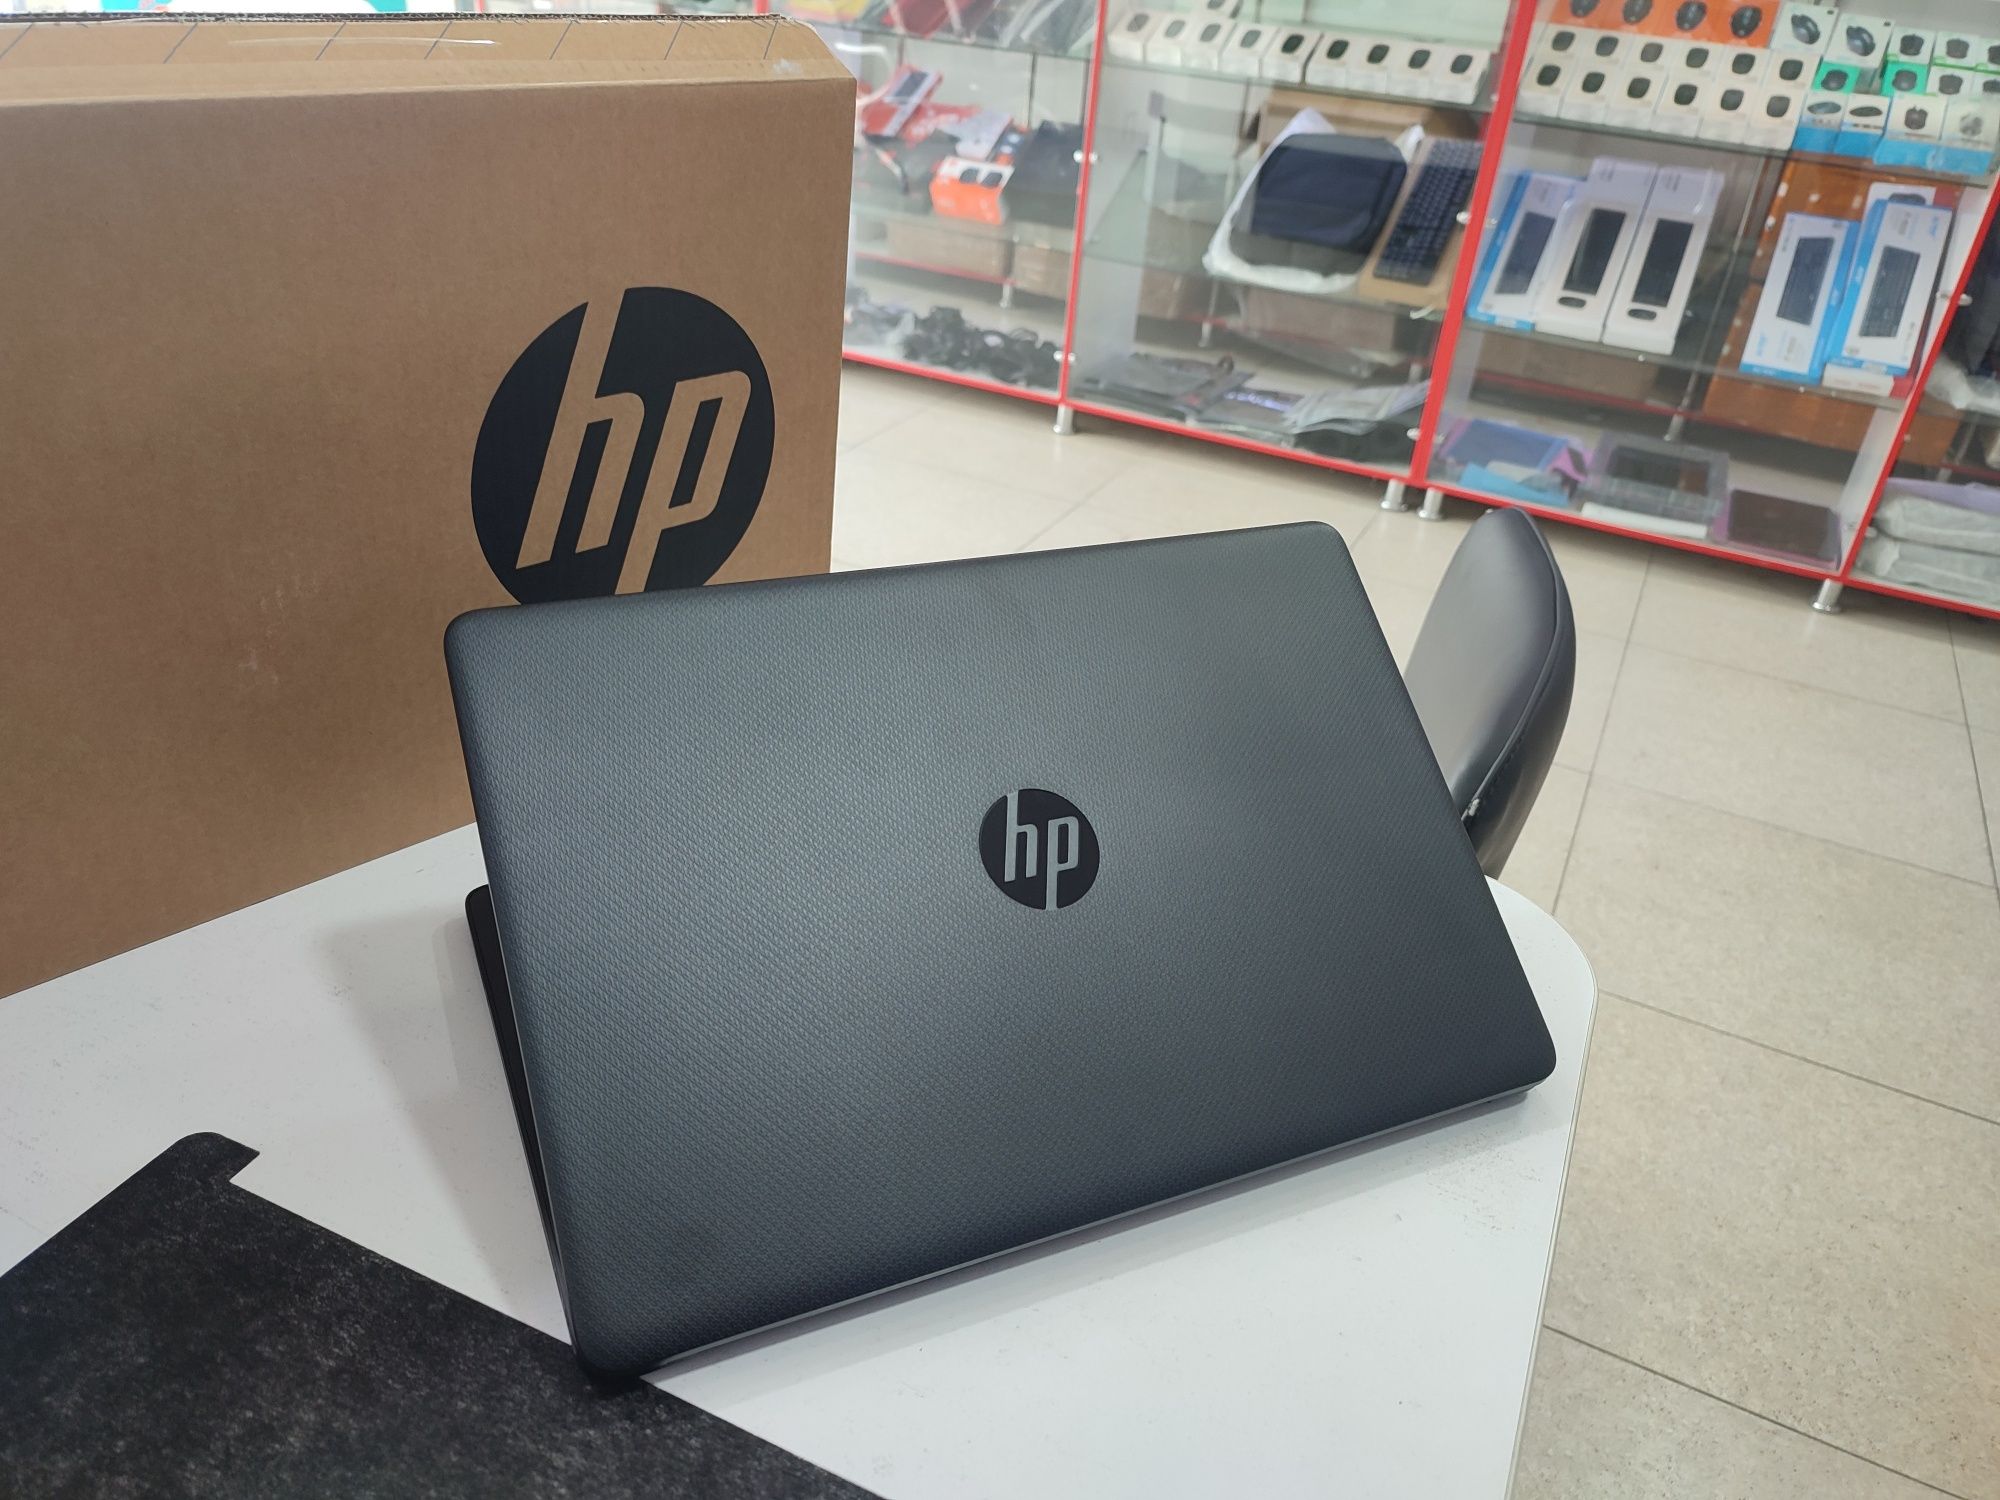 HP core i3 12 avlod mutlaqo yangi